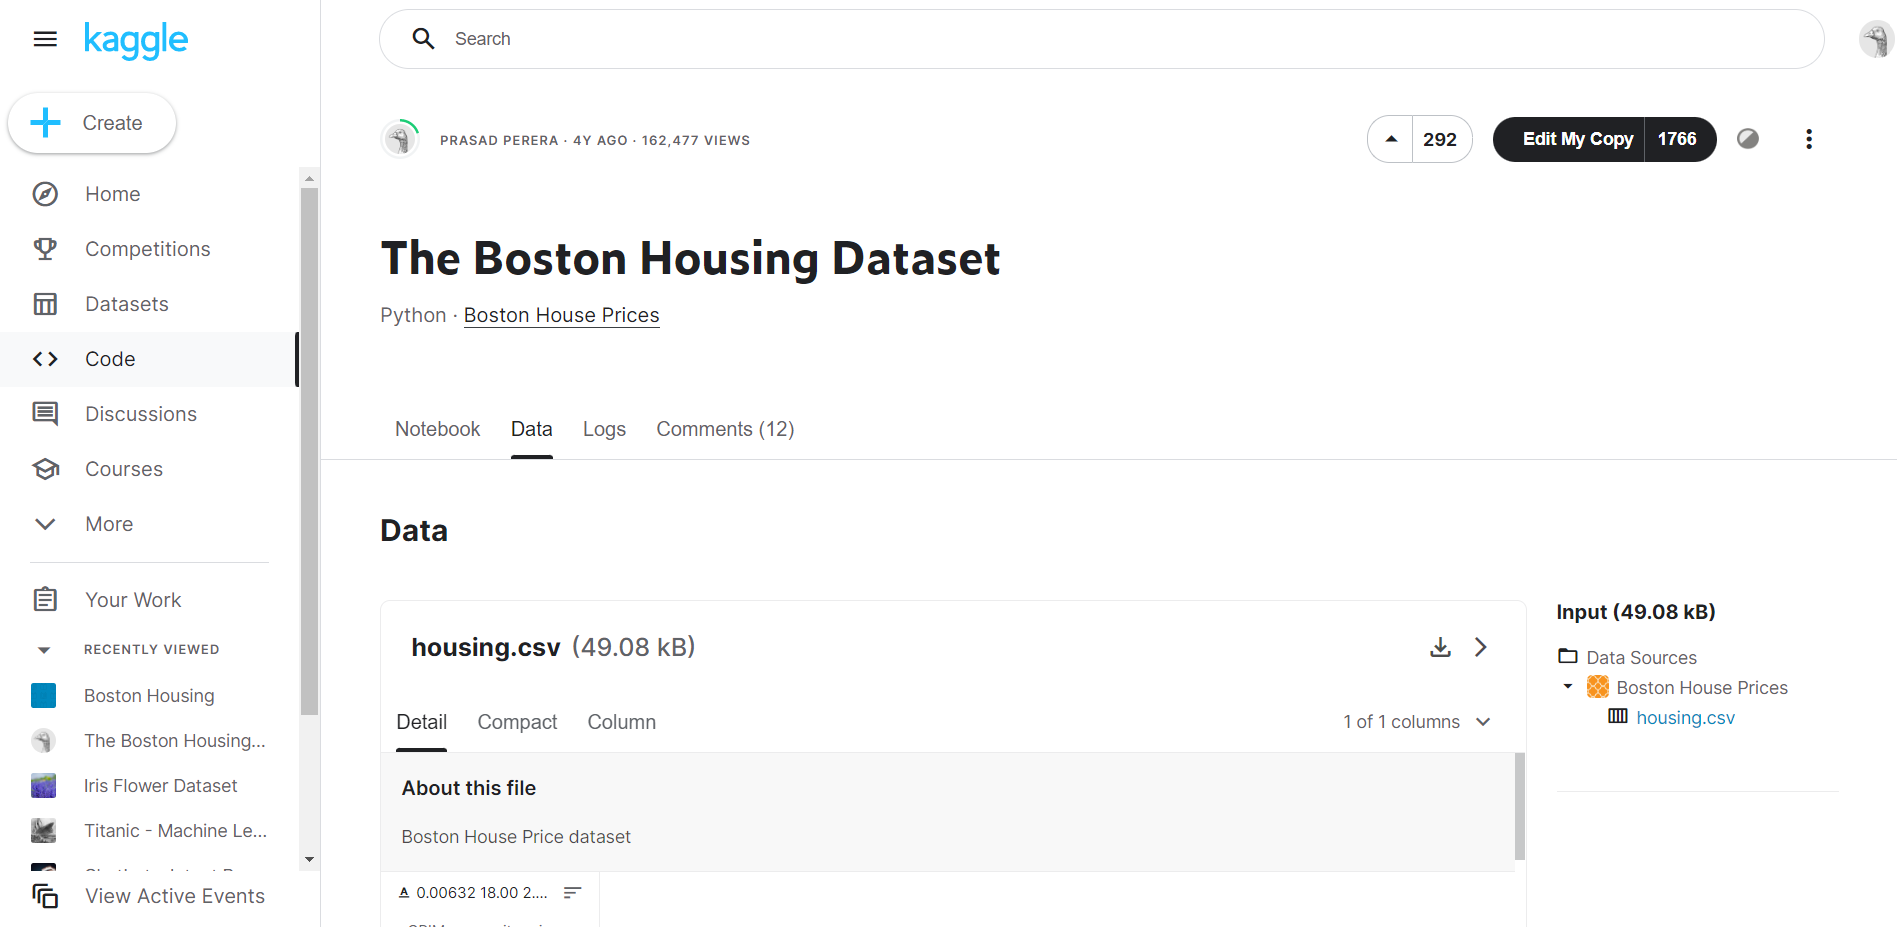 Previsão de preços de casas de Boston